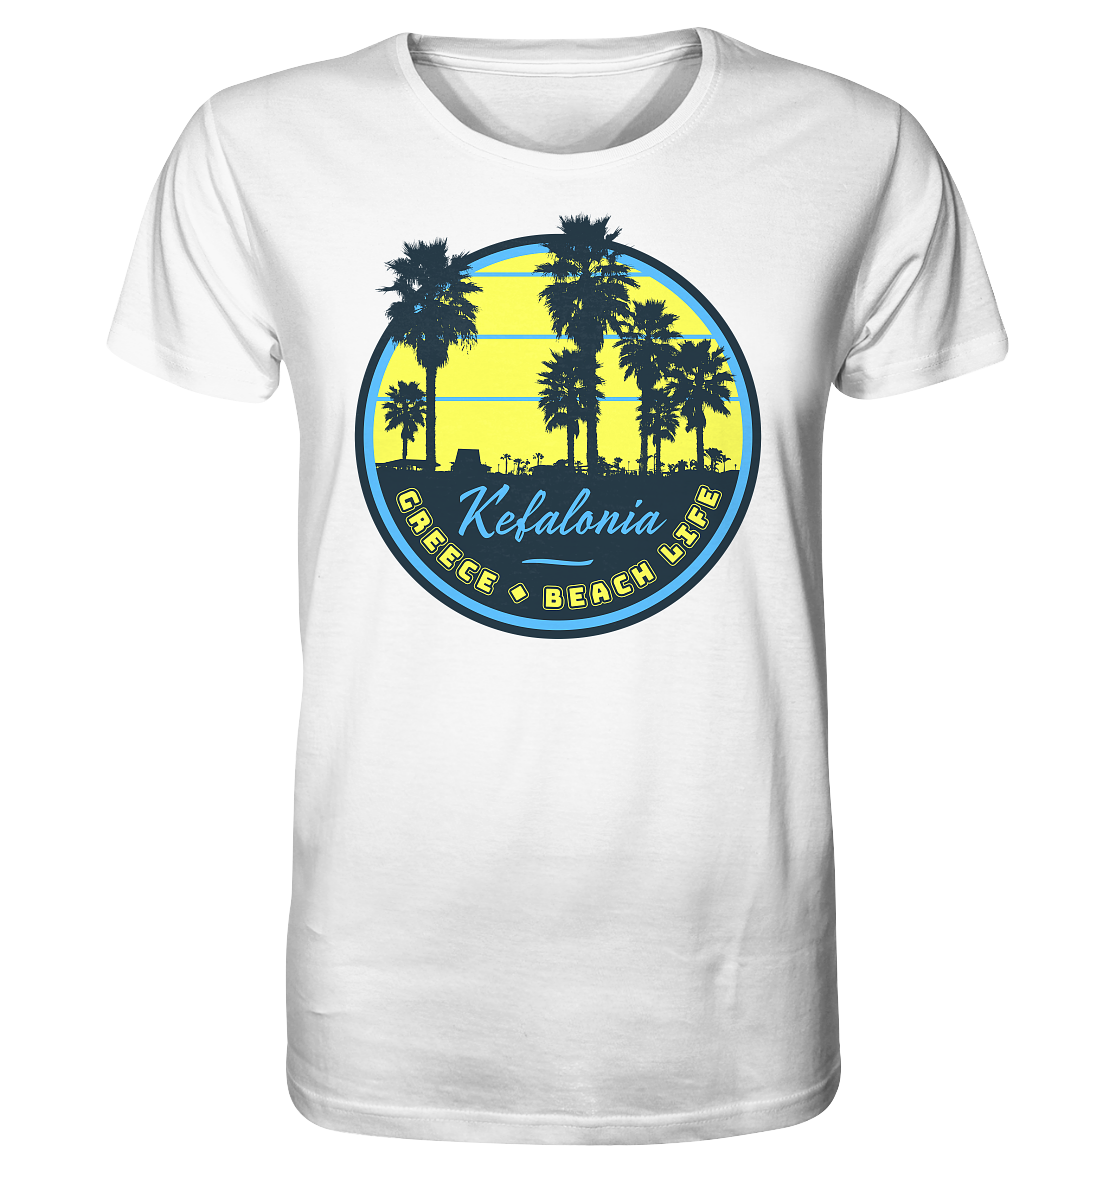 Kefalonia Greece Beach Life - Organic Shirt